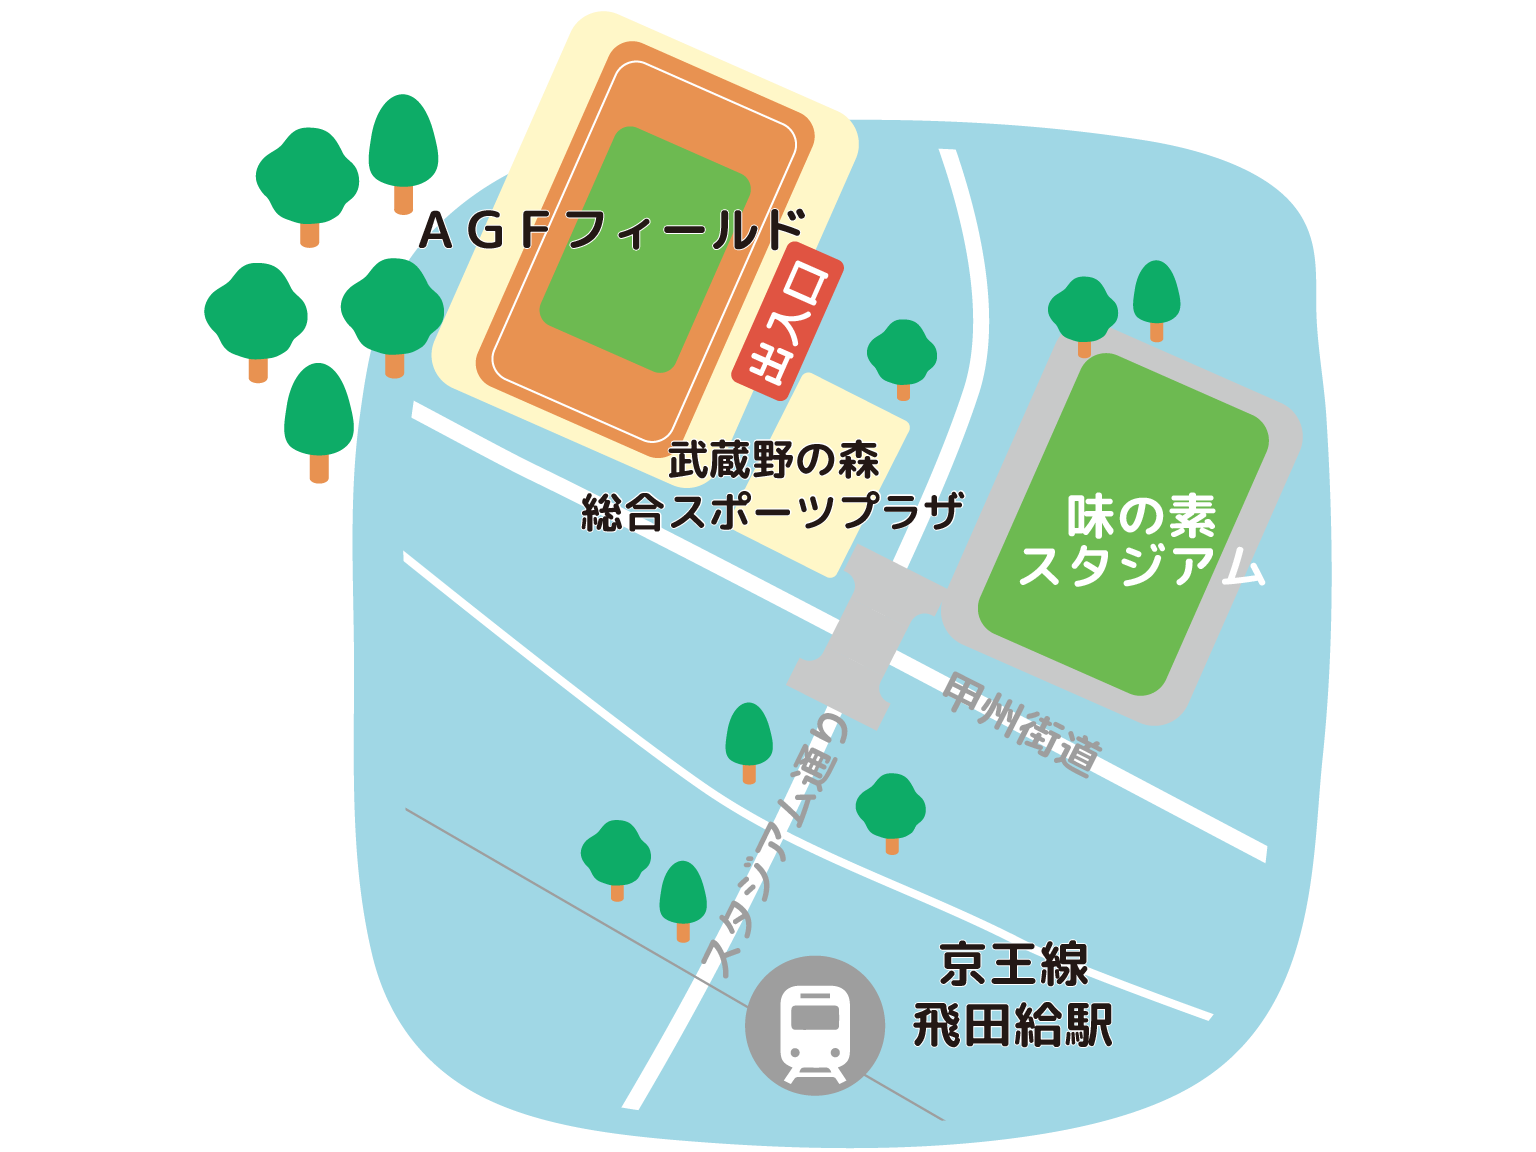 AGFフィールド 武蔵野の森総合スポーツプラザ 地図